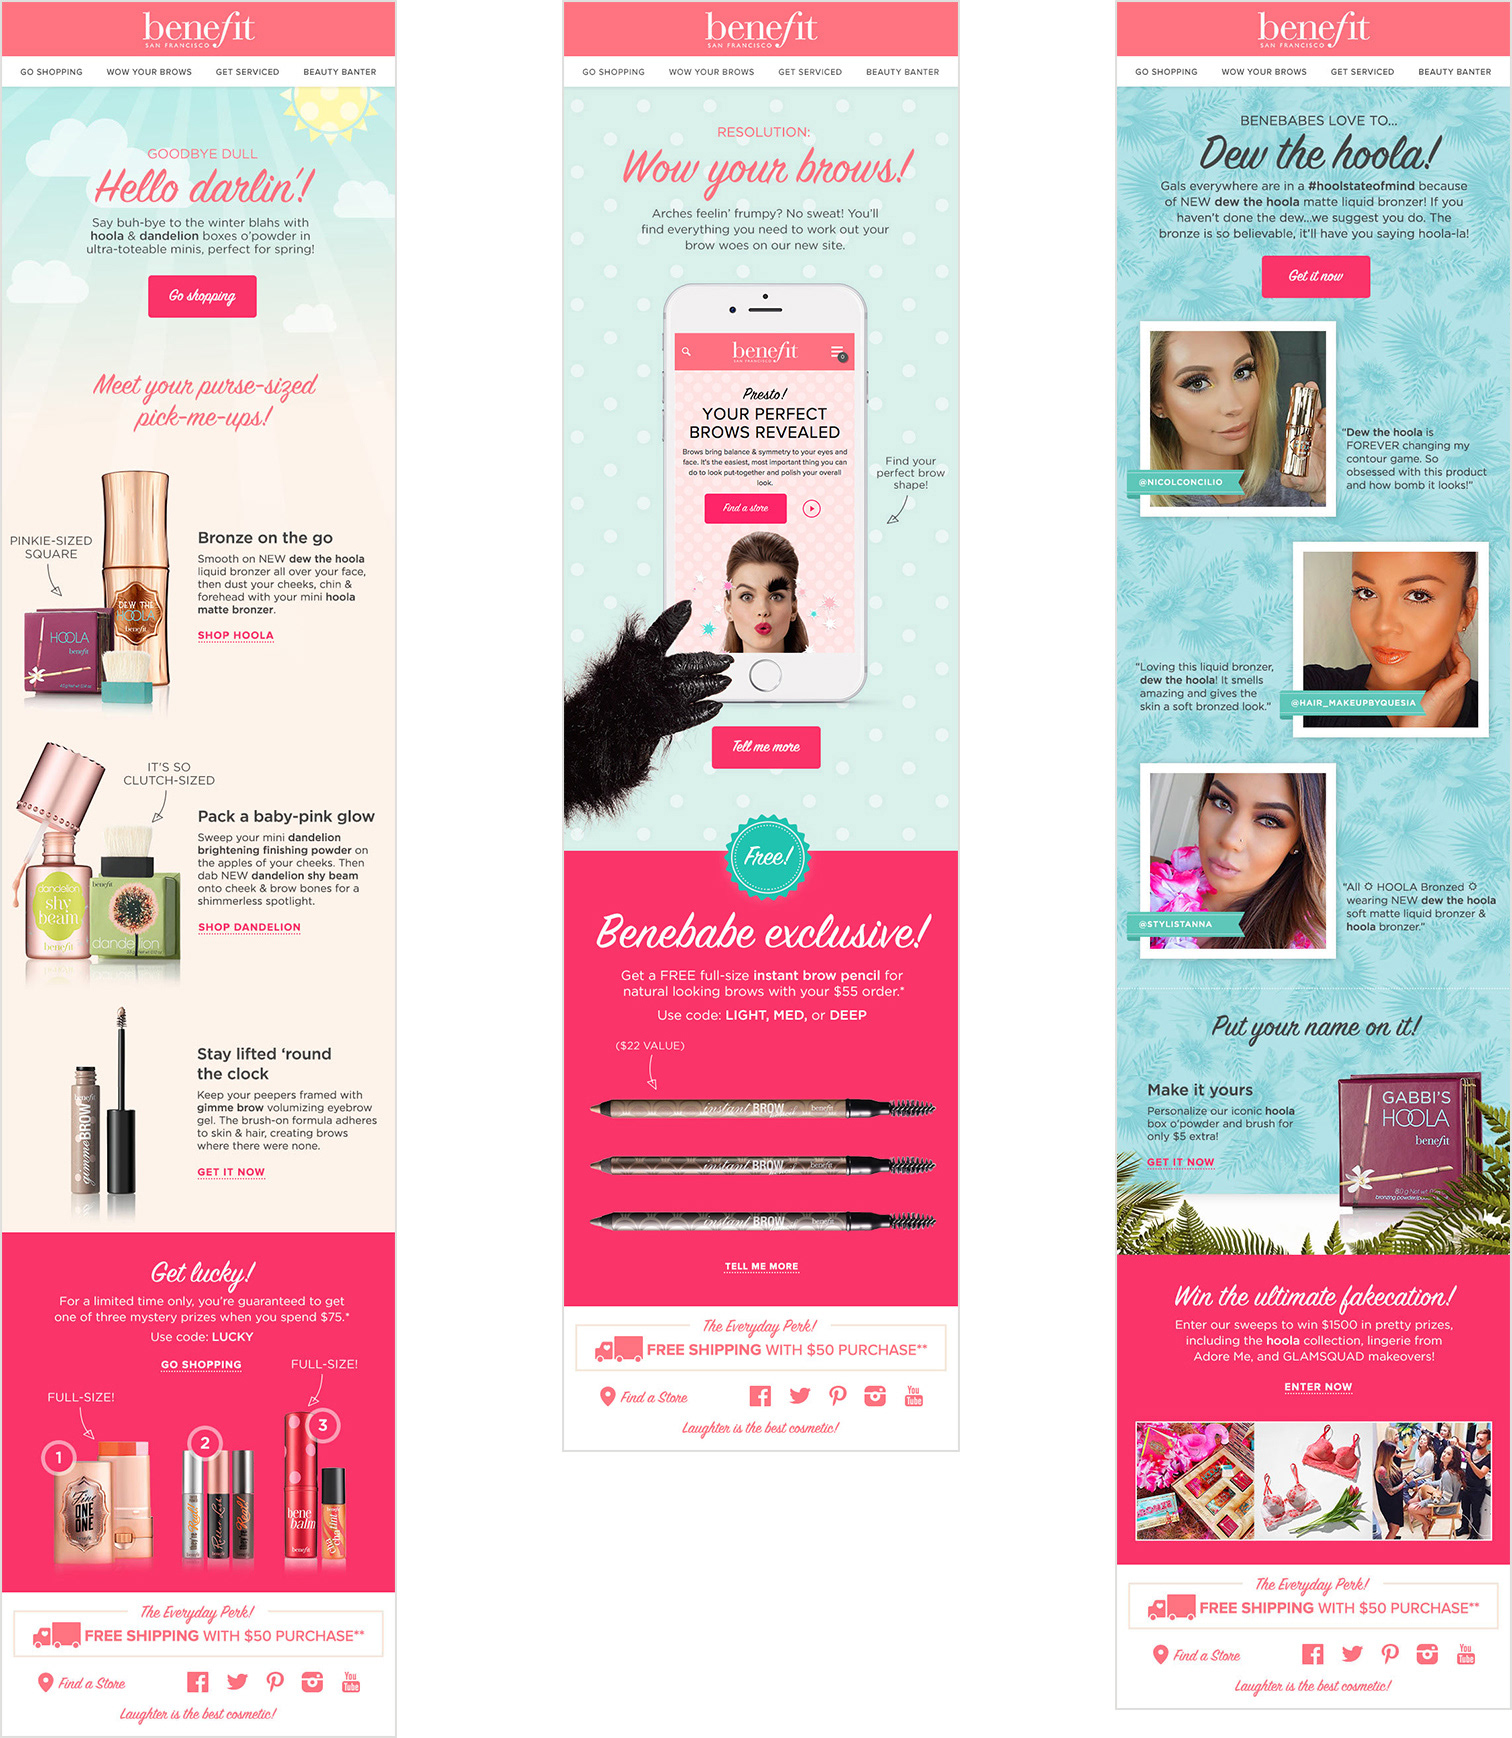 Aliana Rood - Creative - Benefit Cosmetics